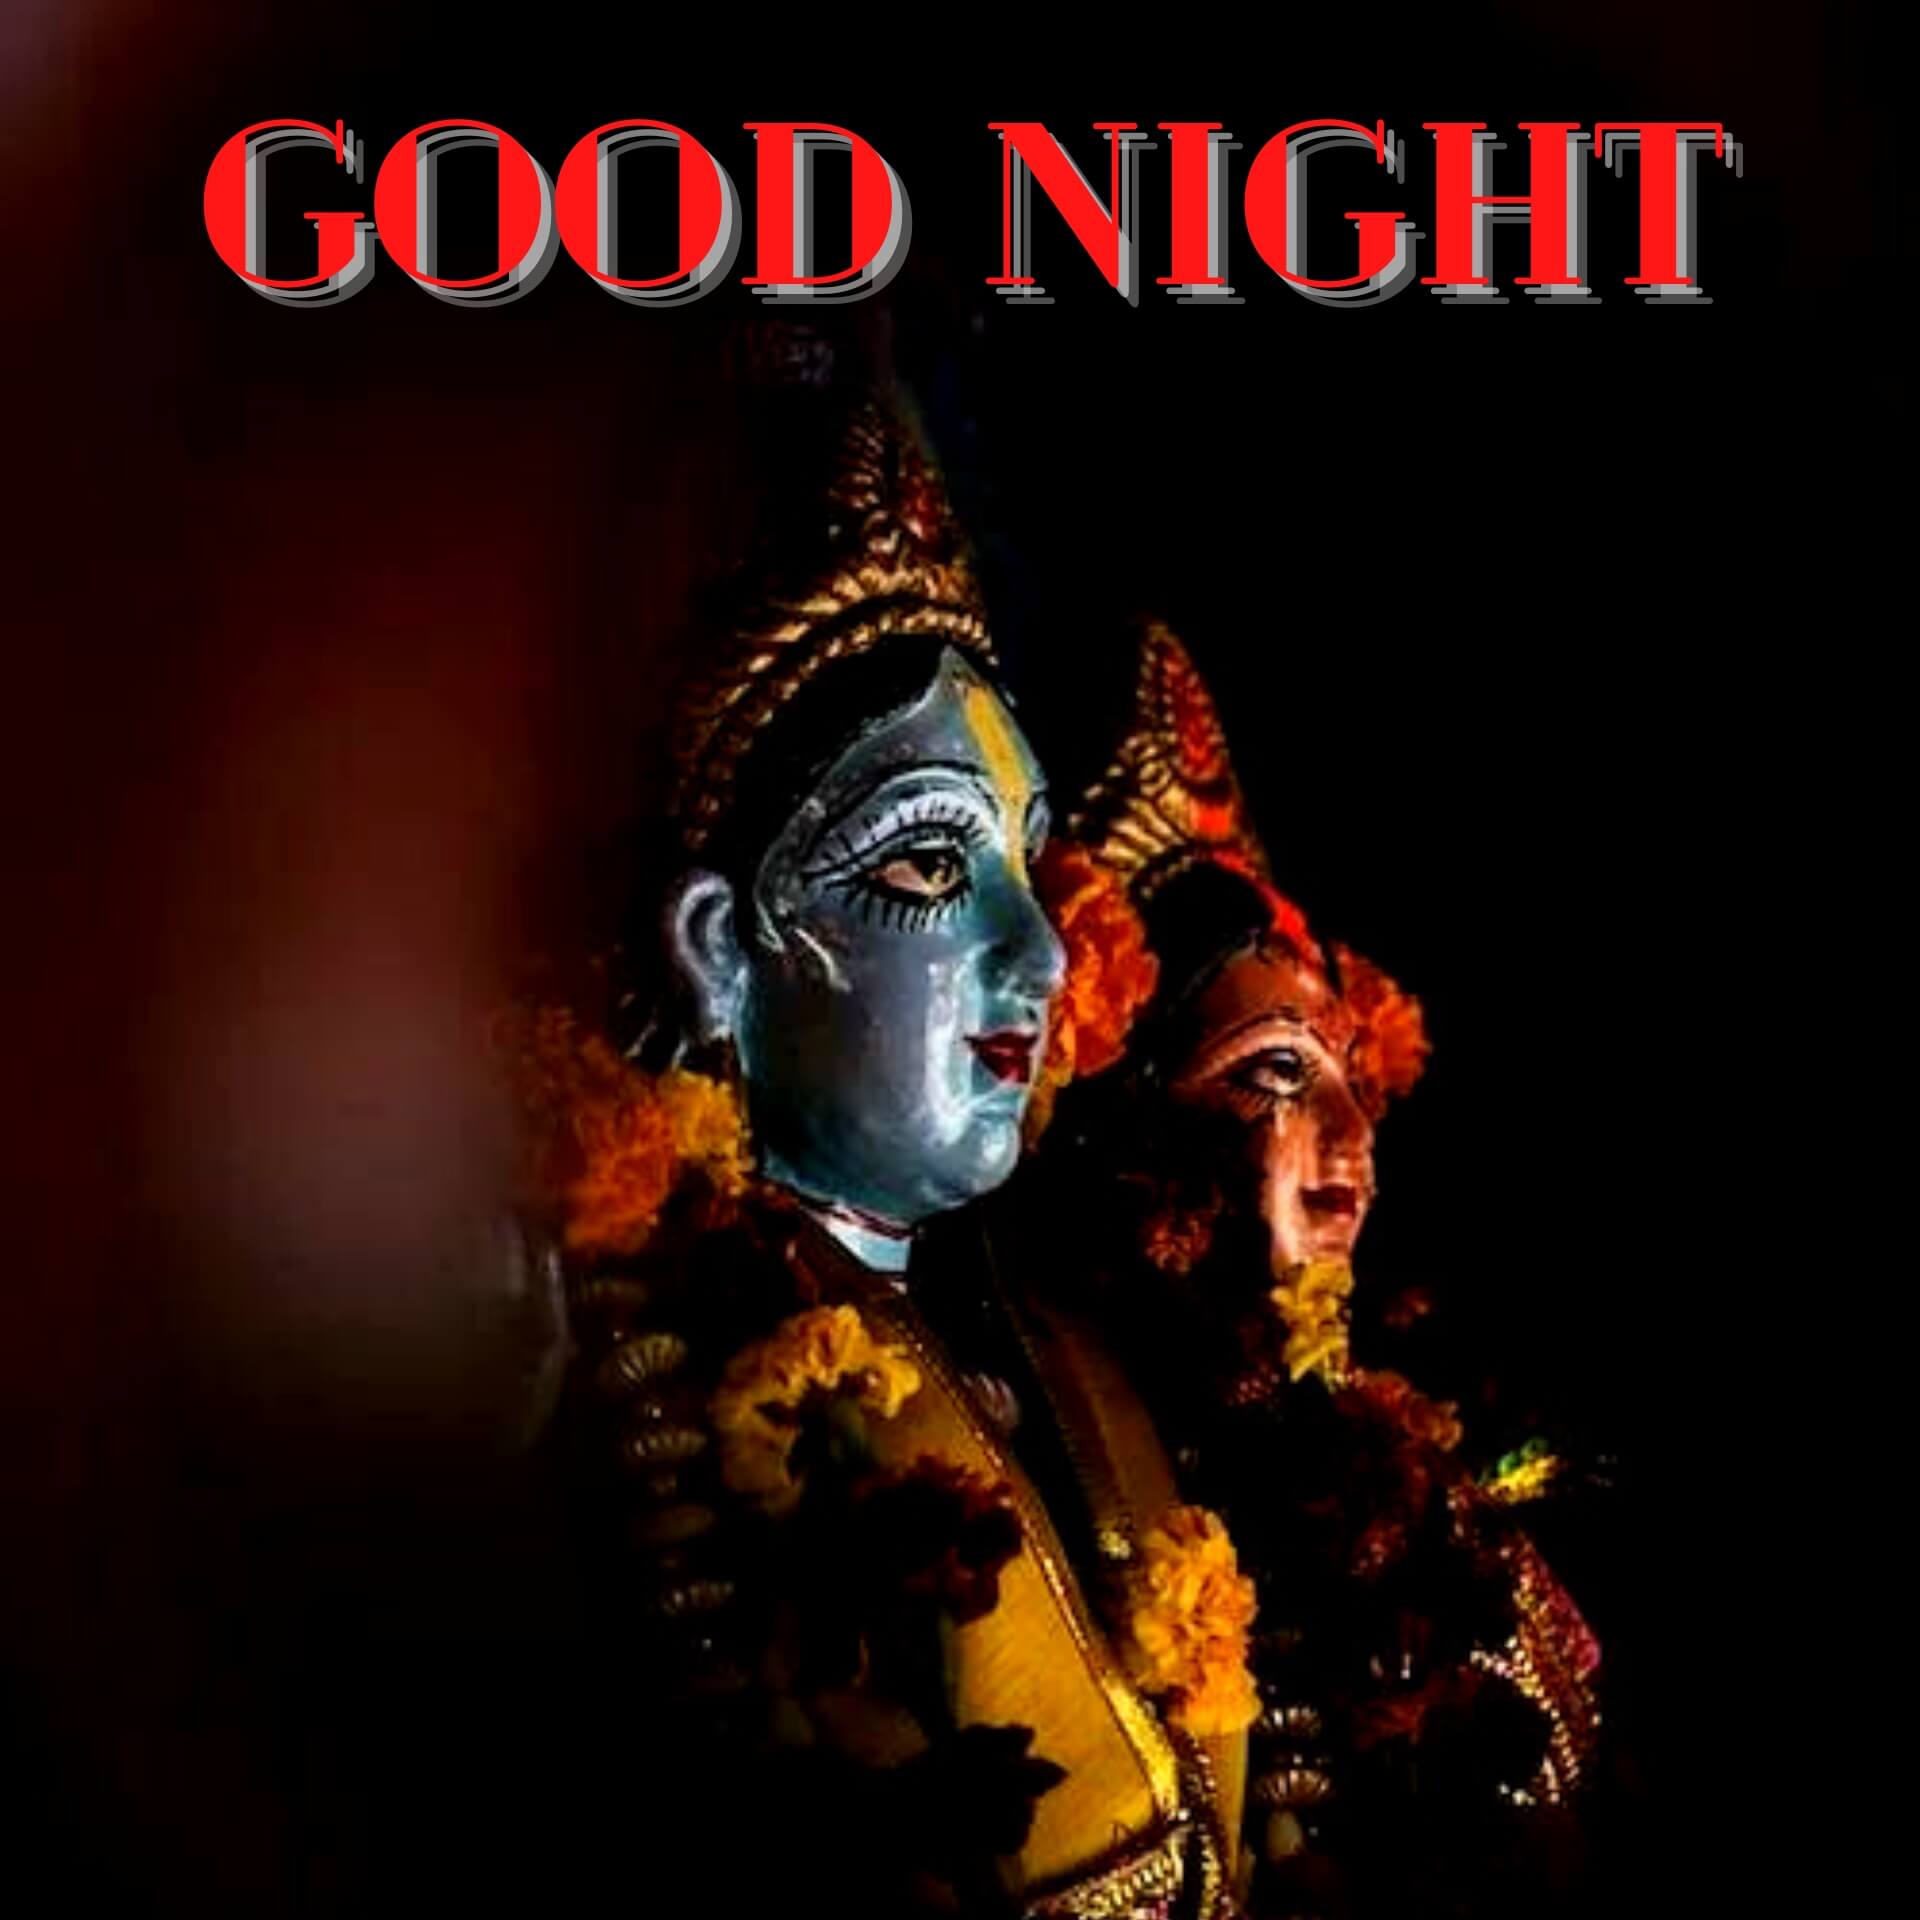 God Good Night Images Photo With Radha Krishna